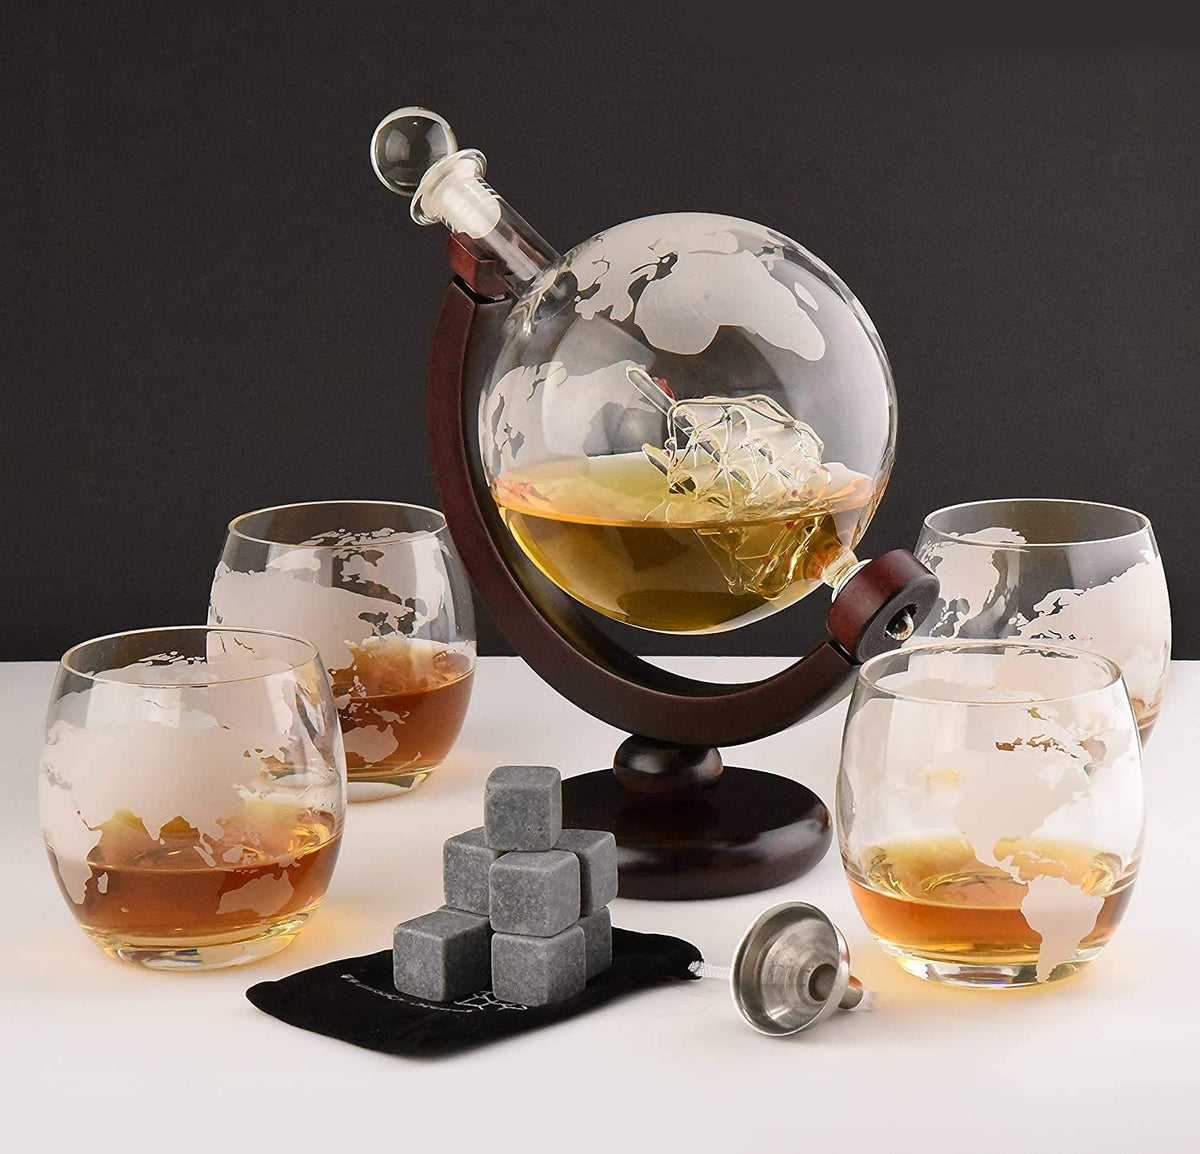 ECODESIGN-US Set of 2 Gibraltar Rocks/Espresso Glasses - 4.5 Ounce - for Cortado Coffee Shots - w/Coasters